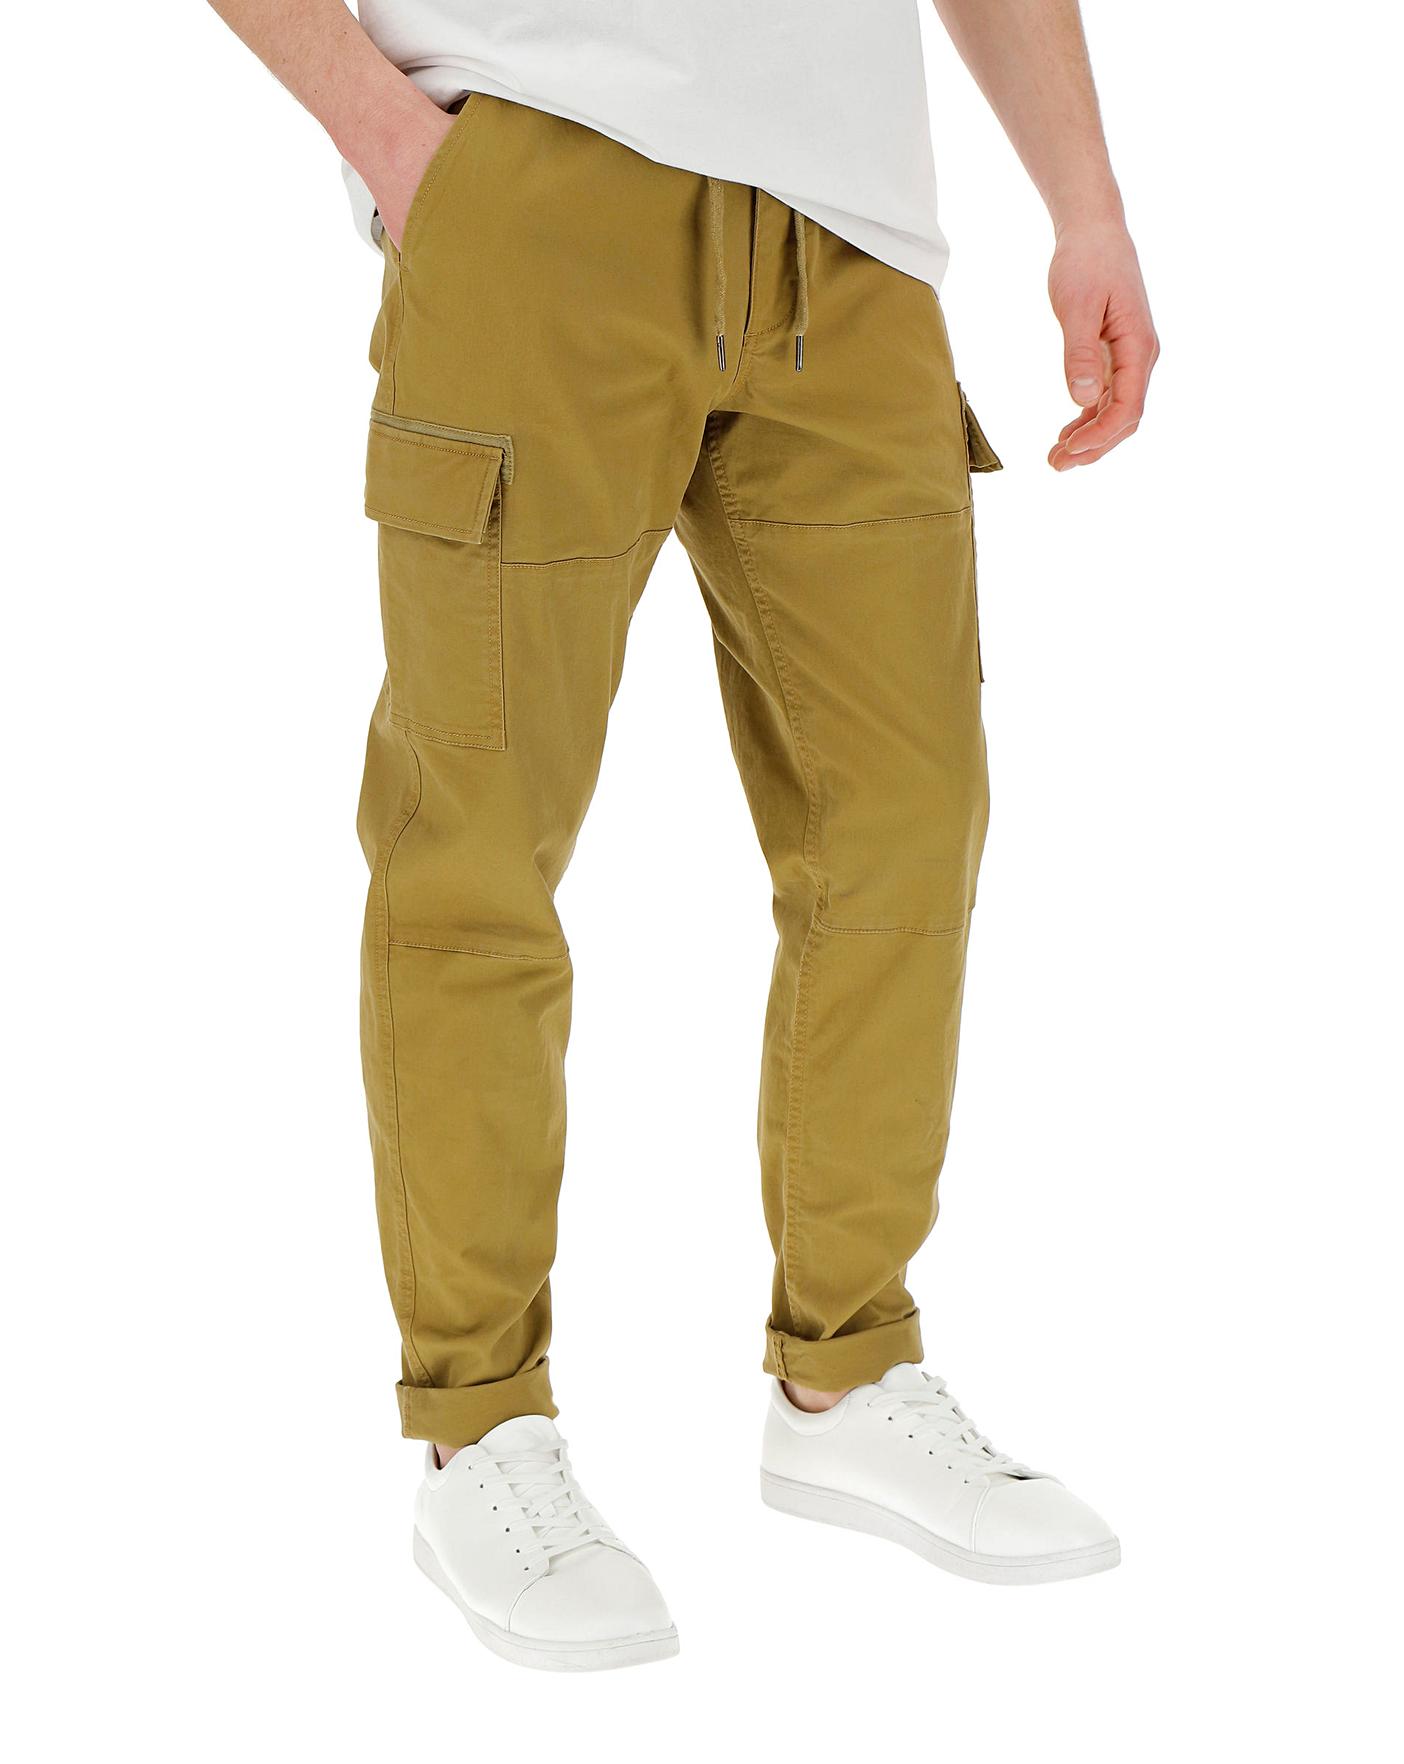 Brown Elasticated Cargo Trousers 31in | Jacamo